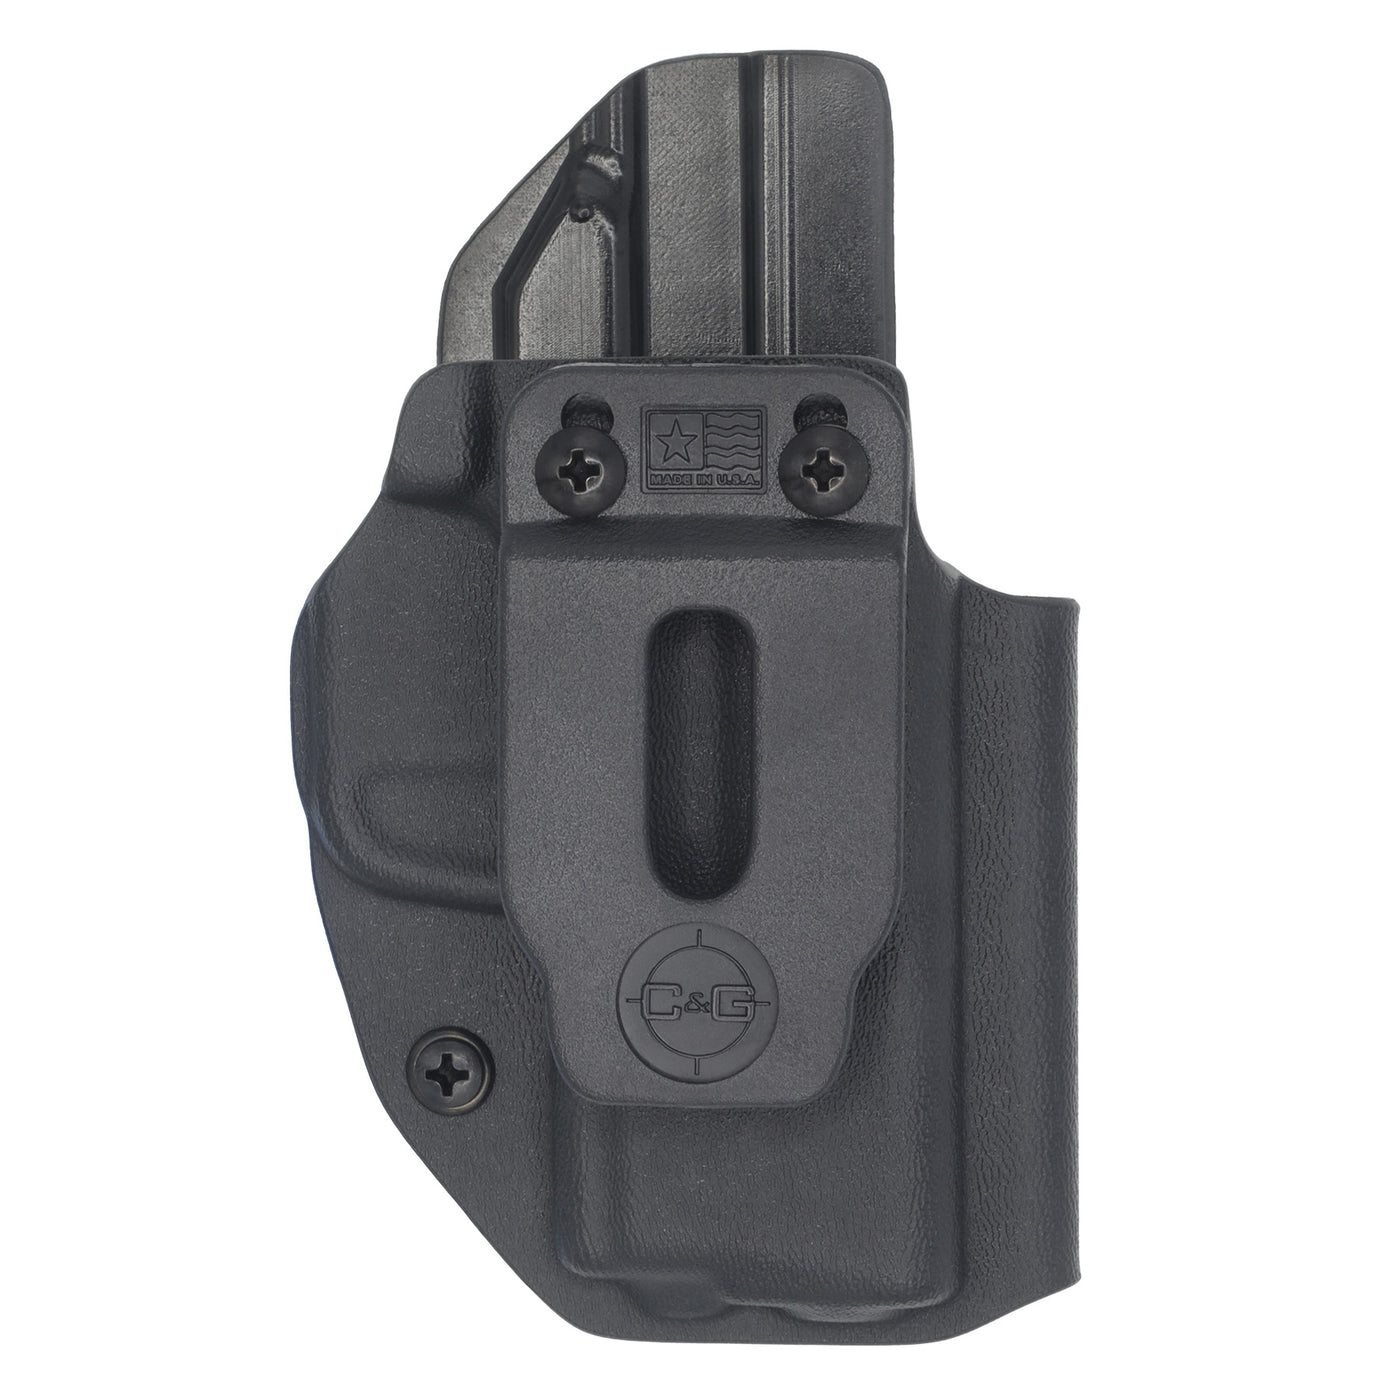 C&G Holsters custom Covert IWB kydex holster for Springfield Xds 3.3 in black